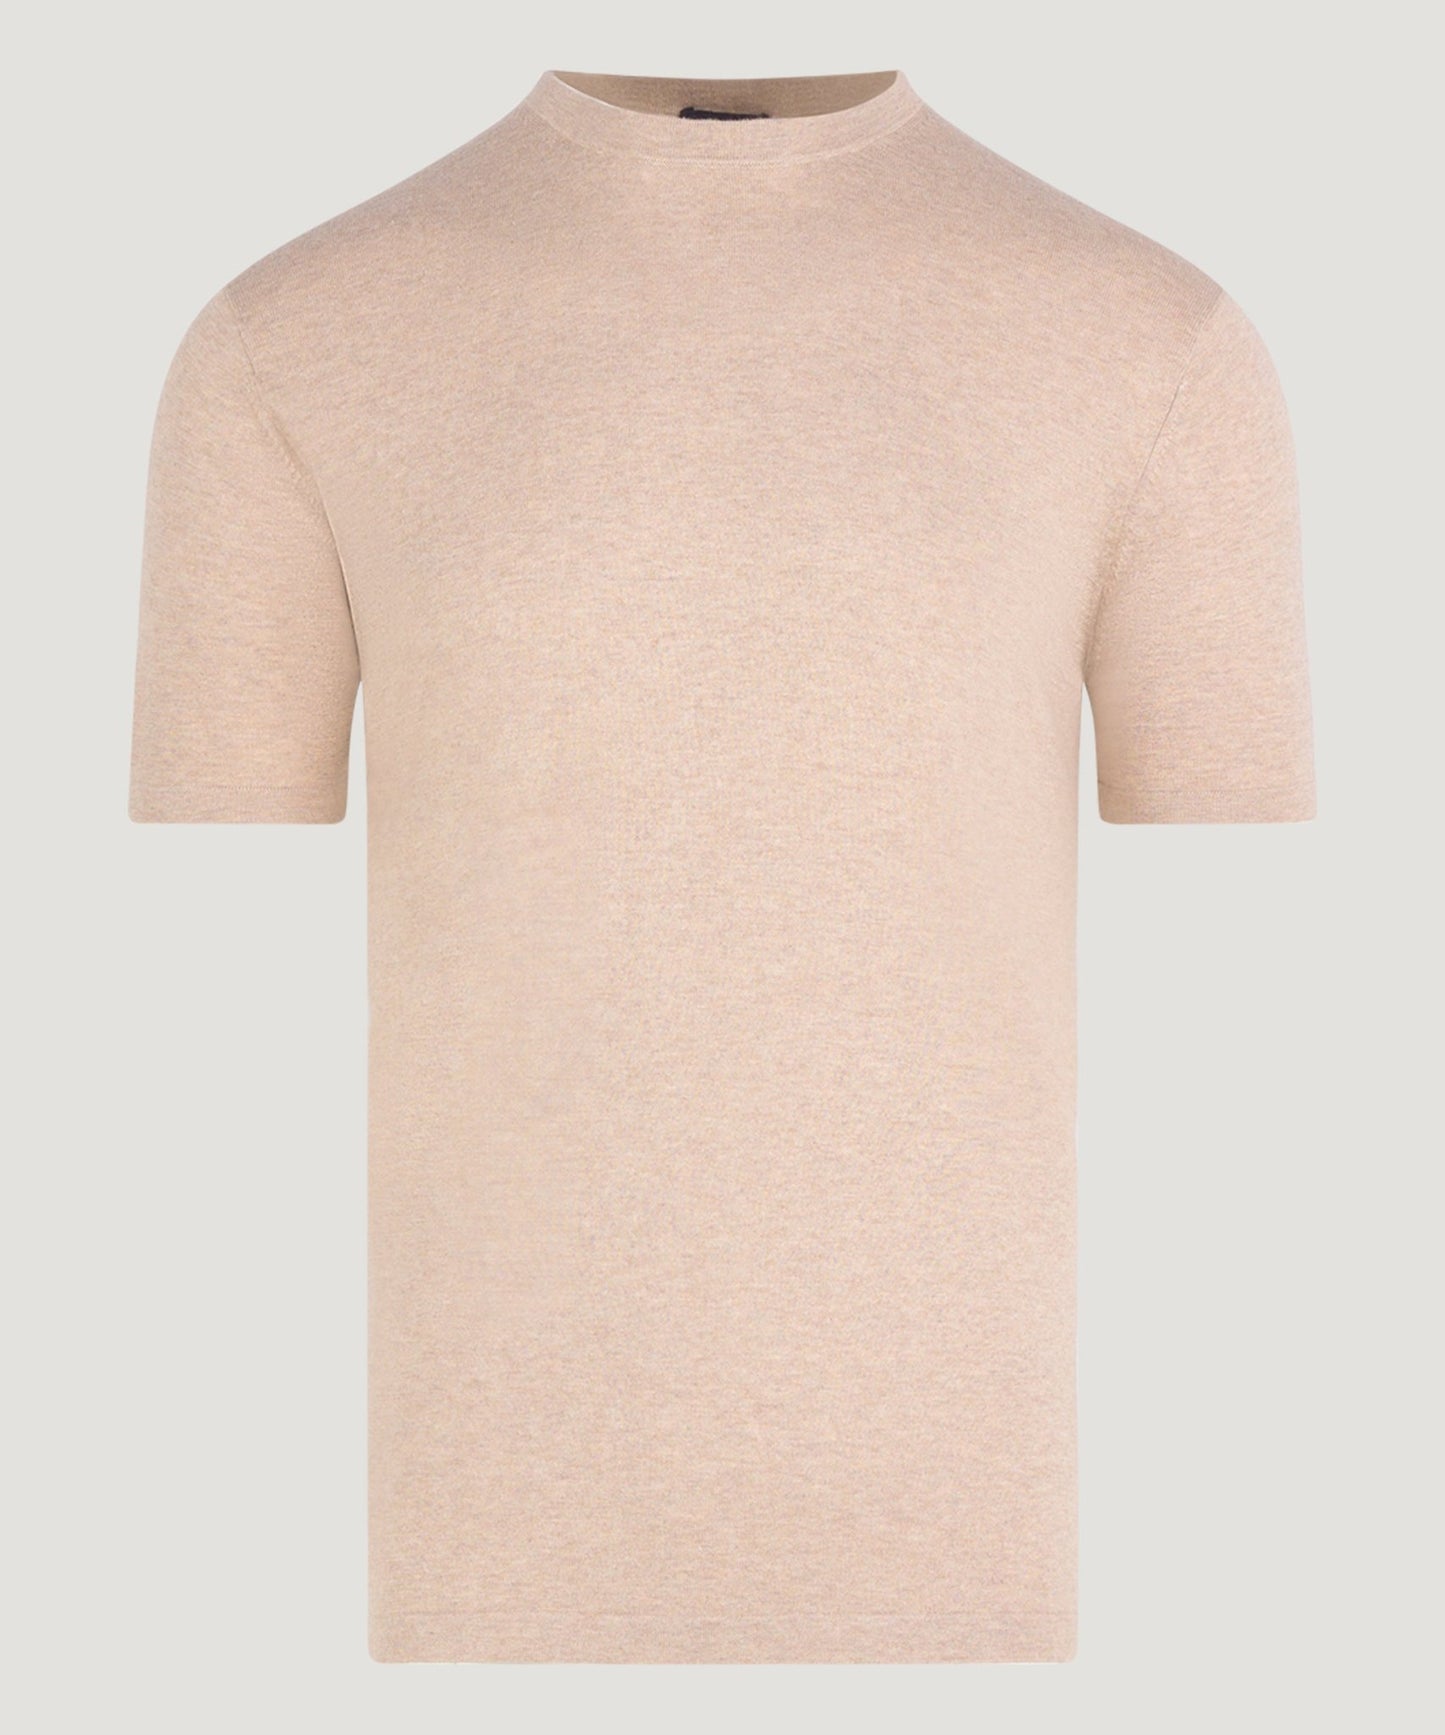 SOCI3TY T-shirt katoen/zijde lichtbruin - The Society Shop